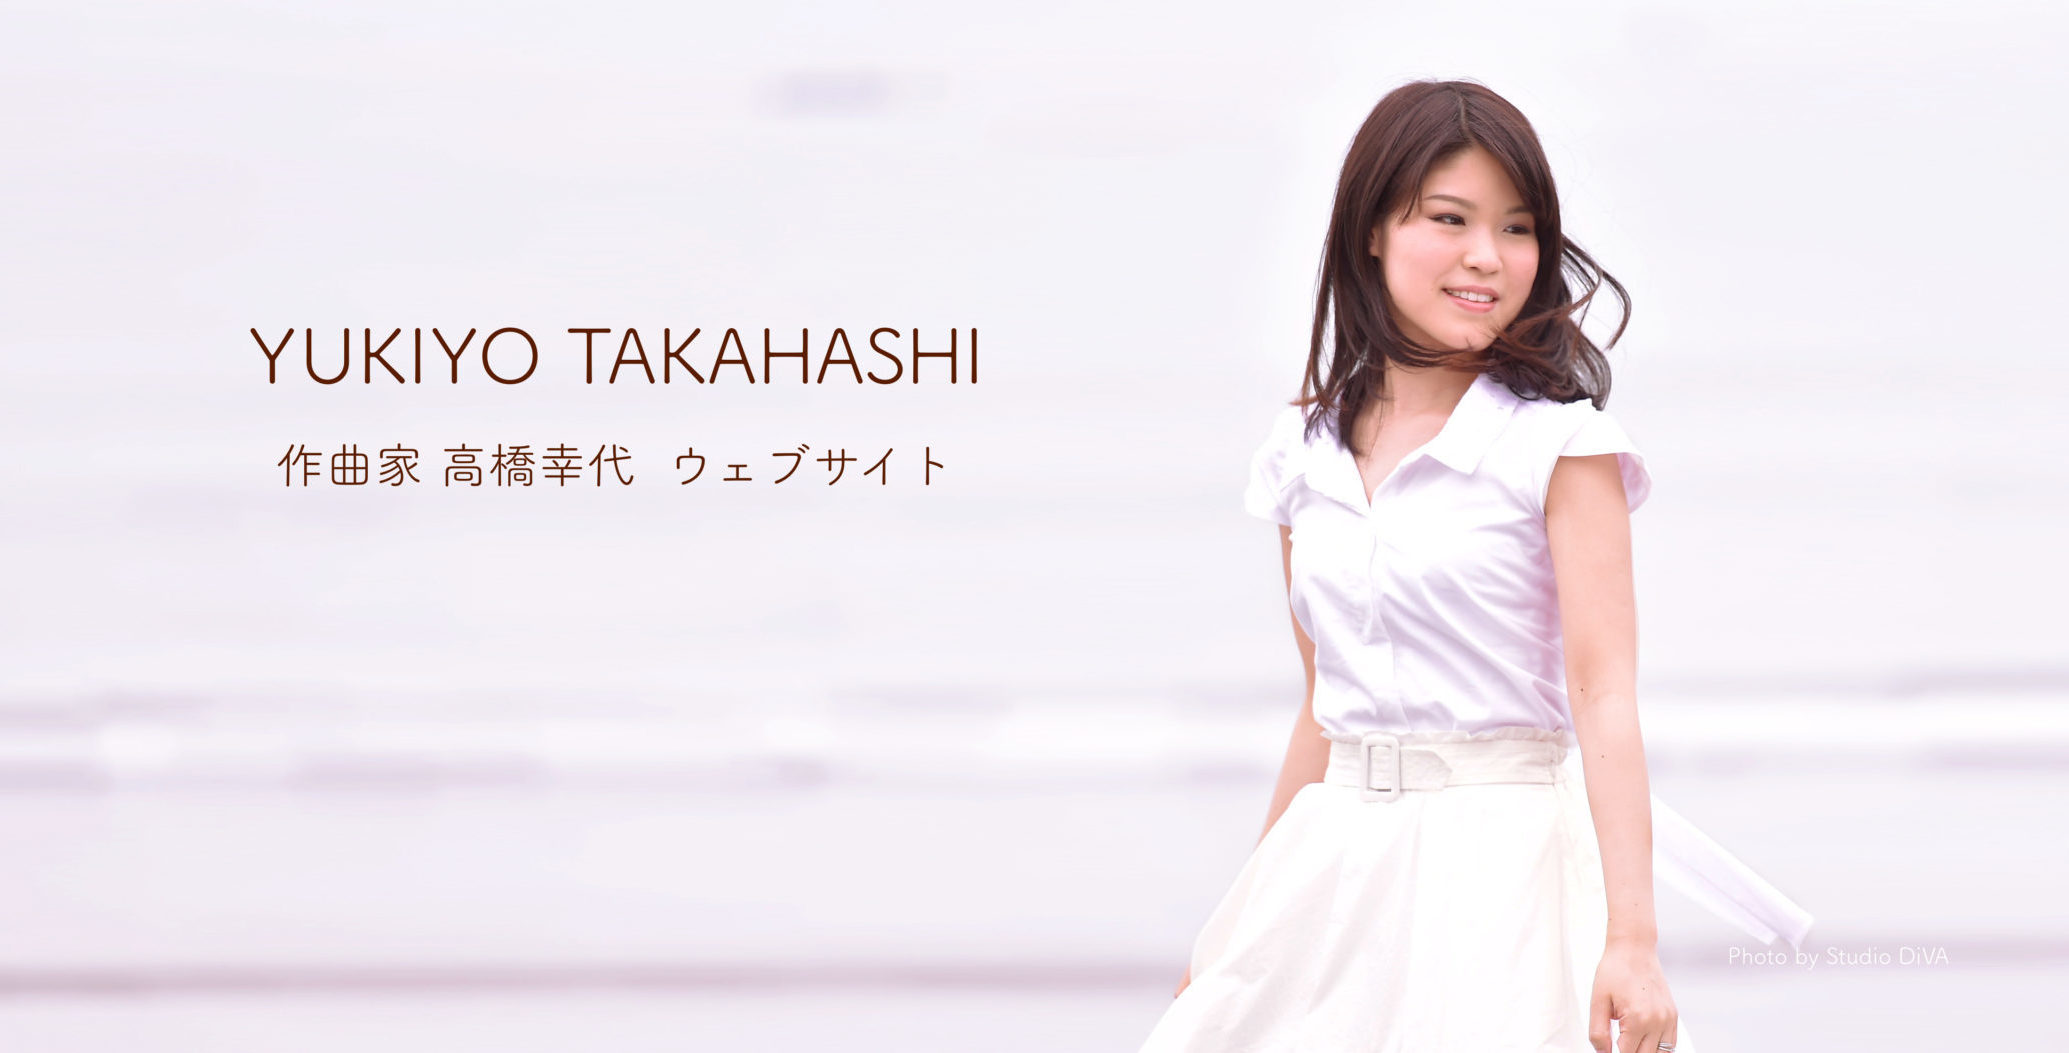 Yukiyo Takahashi Website